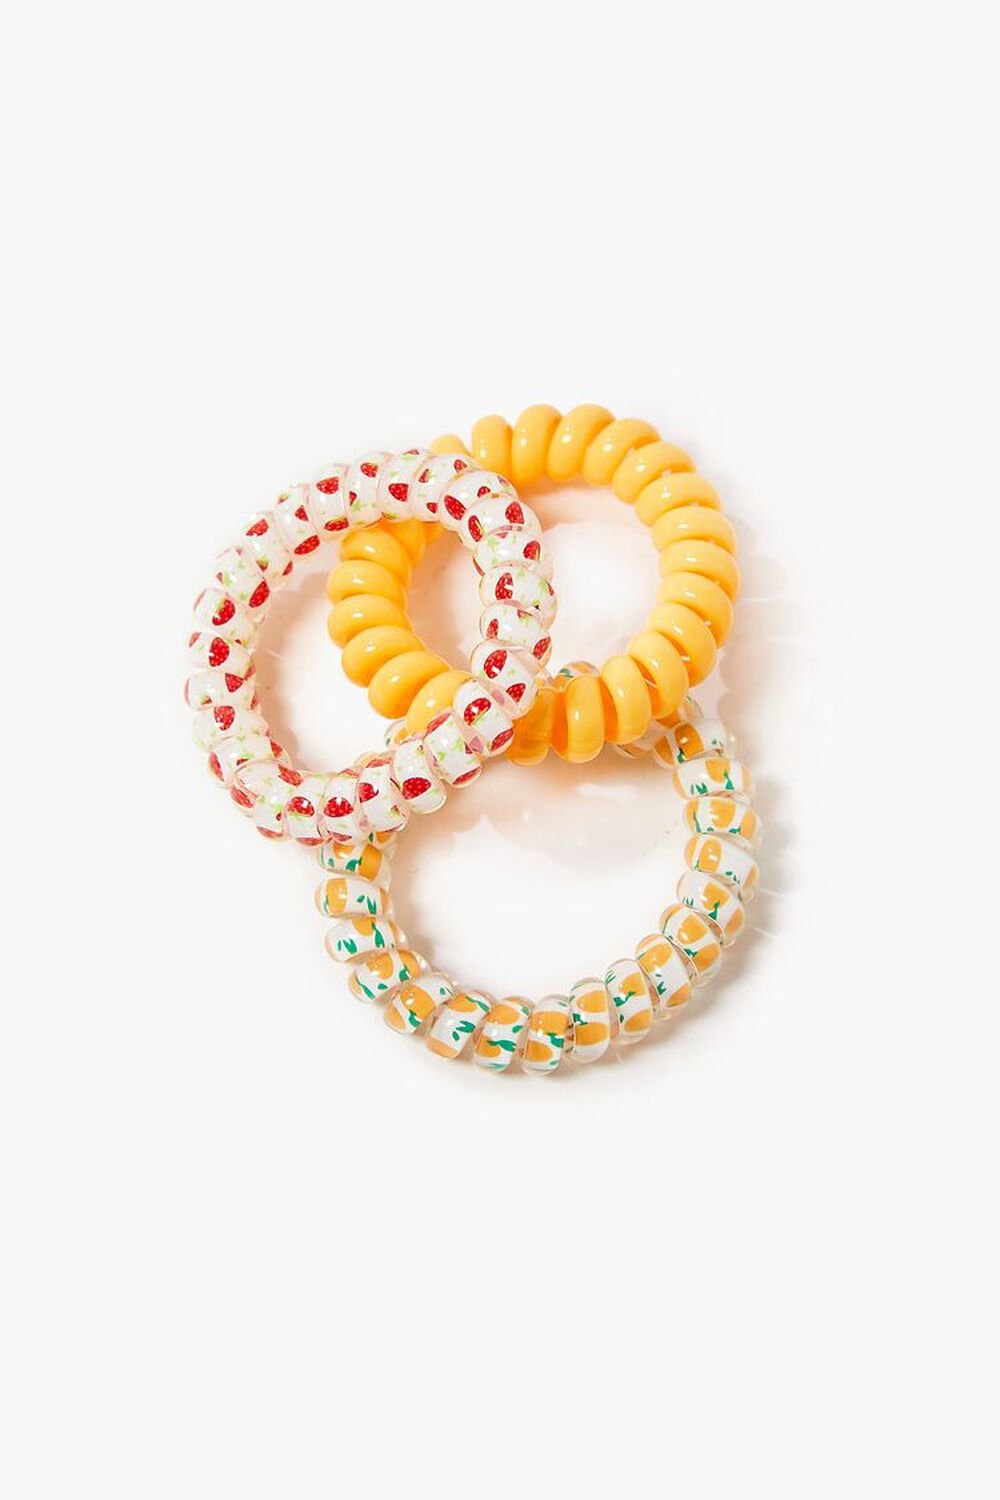 ORANGE/MULTI Strawberry Print Spiral Hair Tie Set, image 1